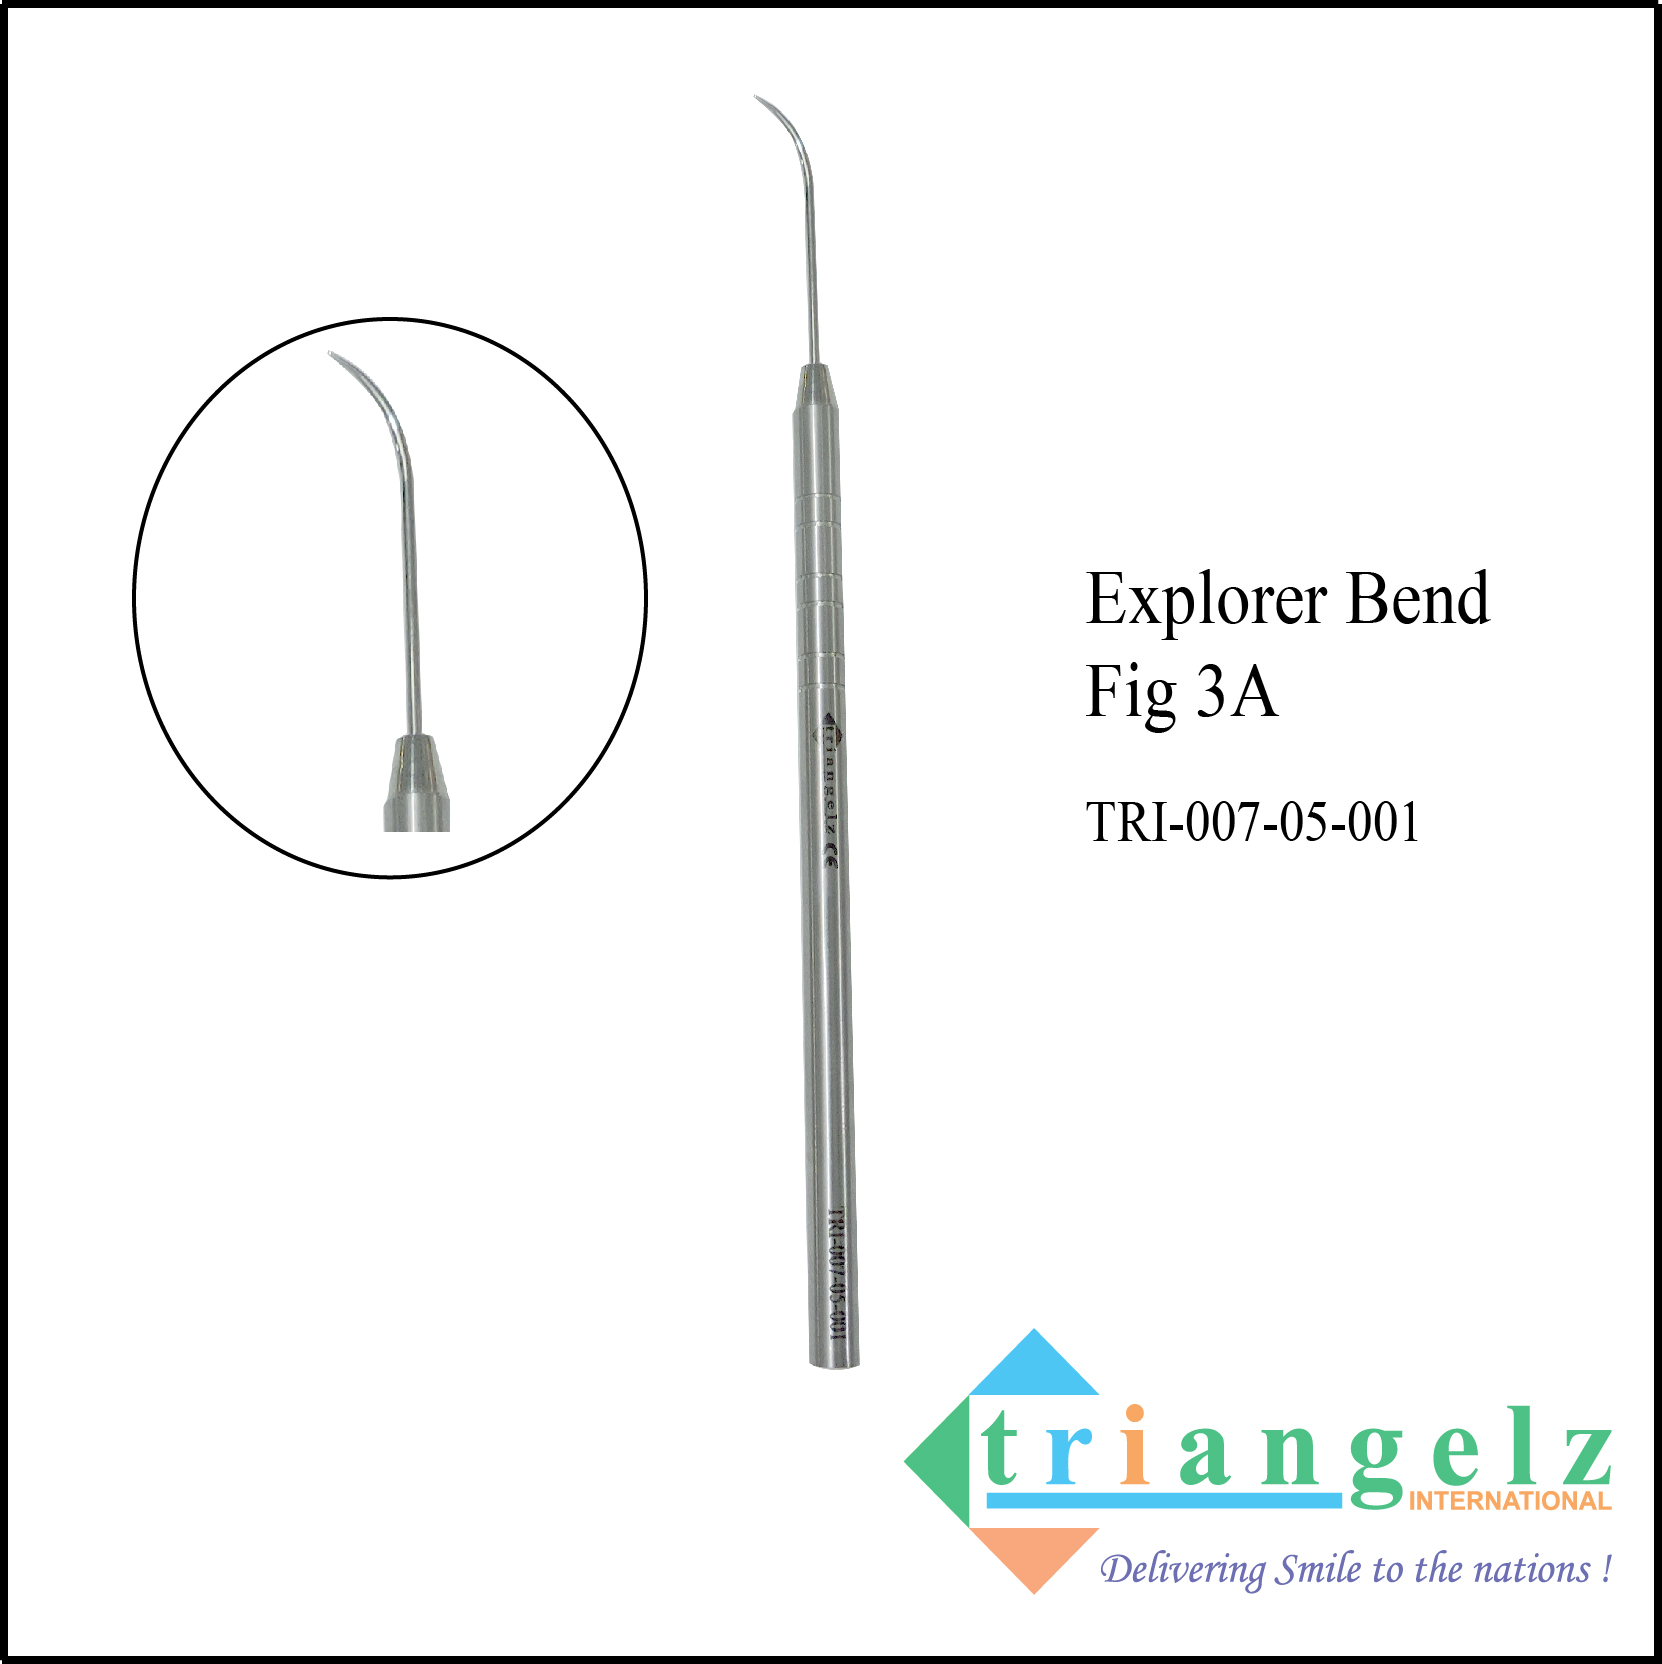 TRI-007-05-001 Explorer Bend Fig 3A